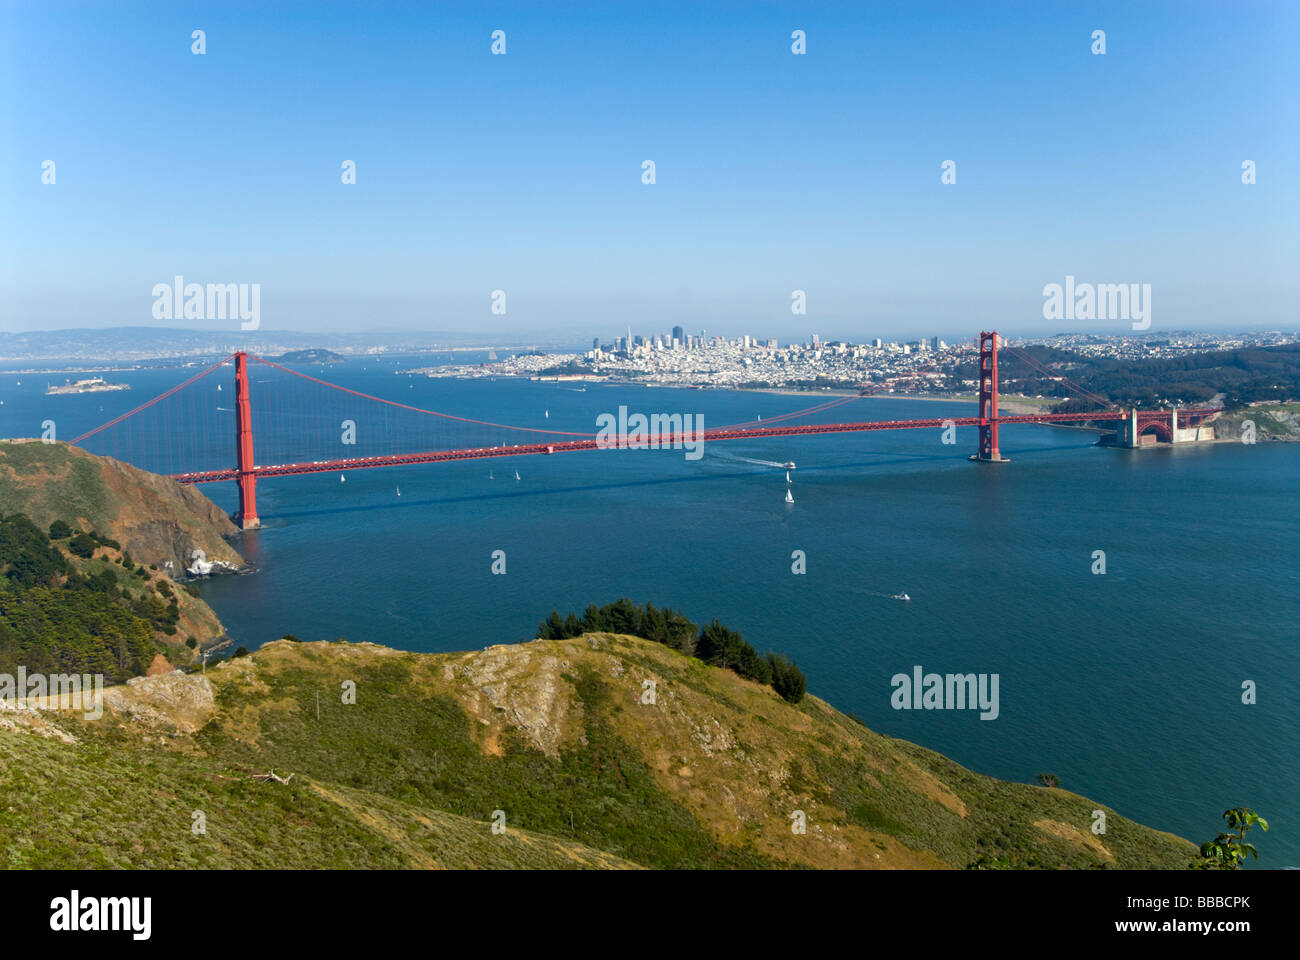 California: San Francisco's Golden Gate Bridge, viewed from Marin Headlands. Stock Photo